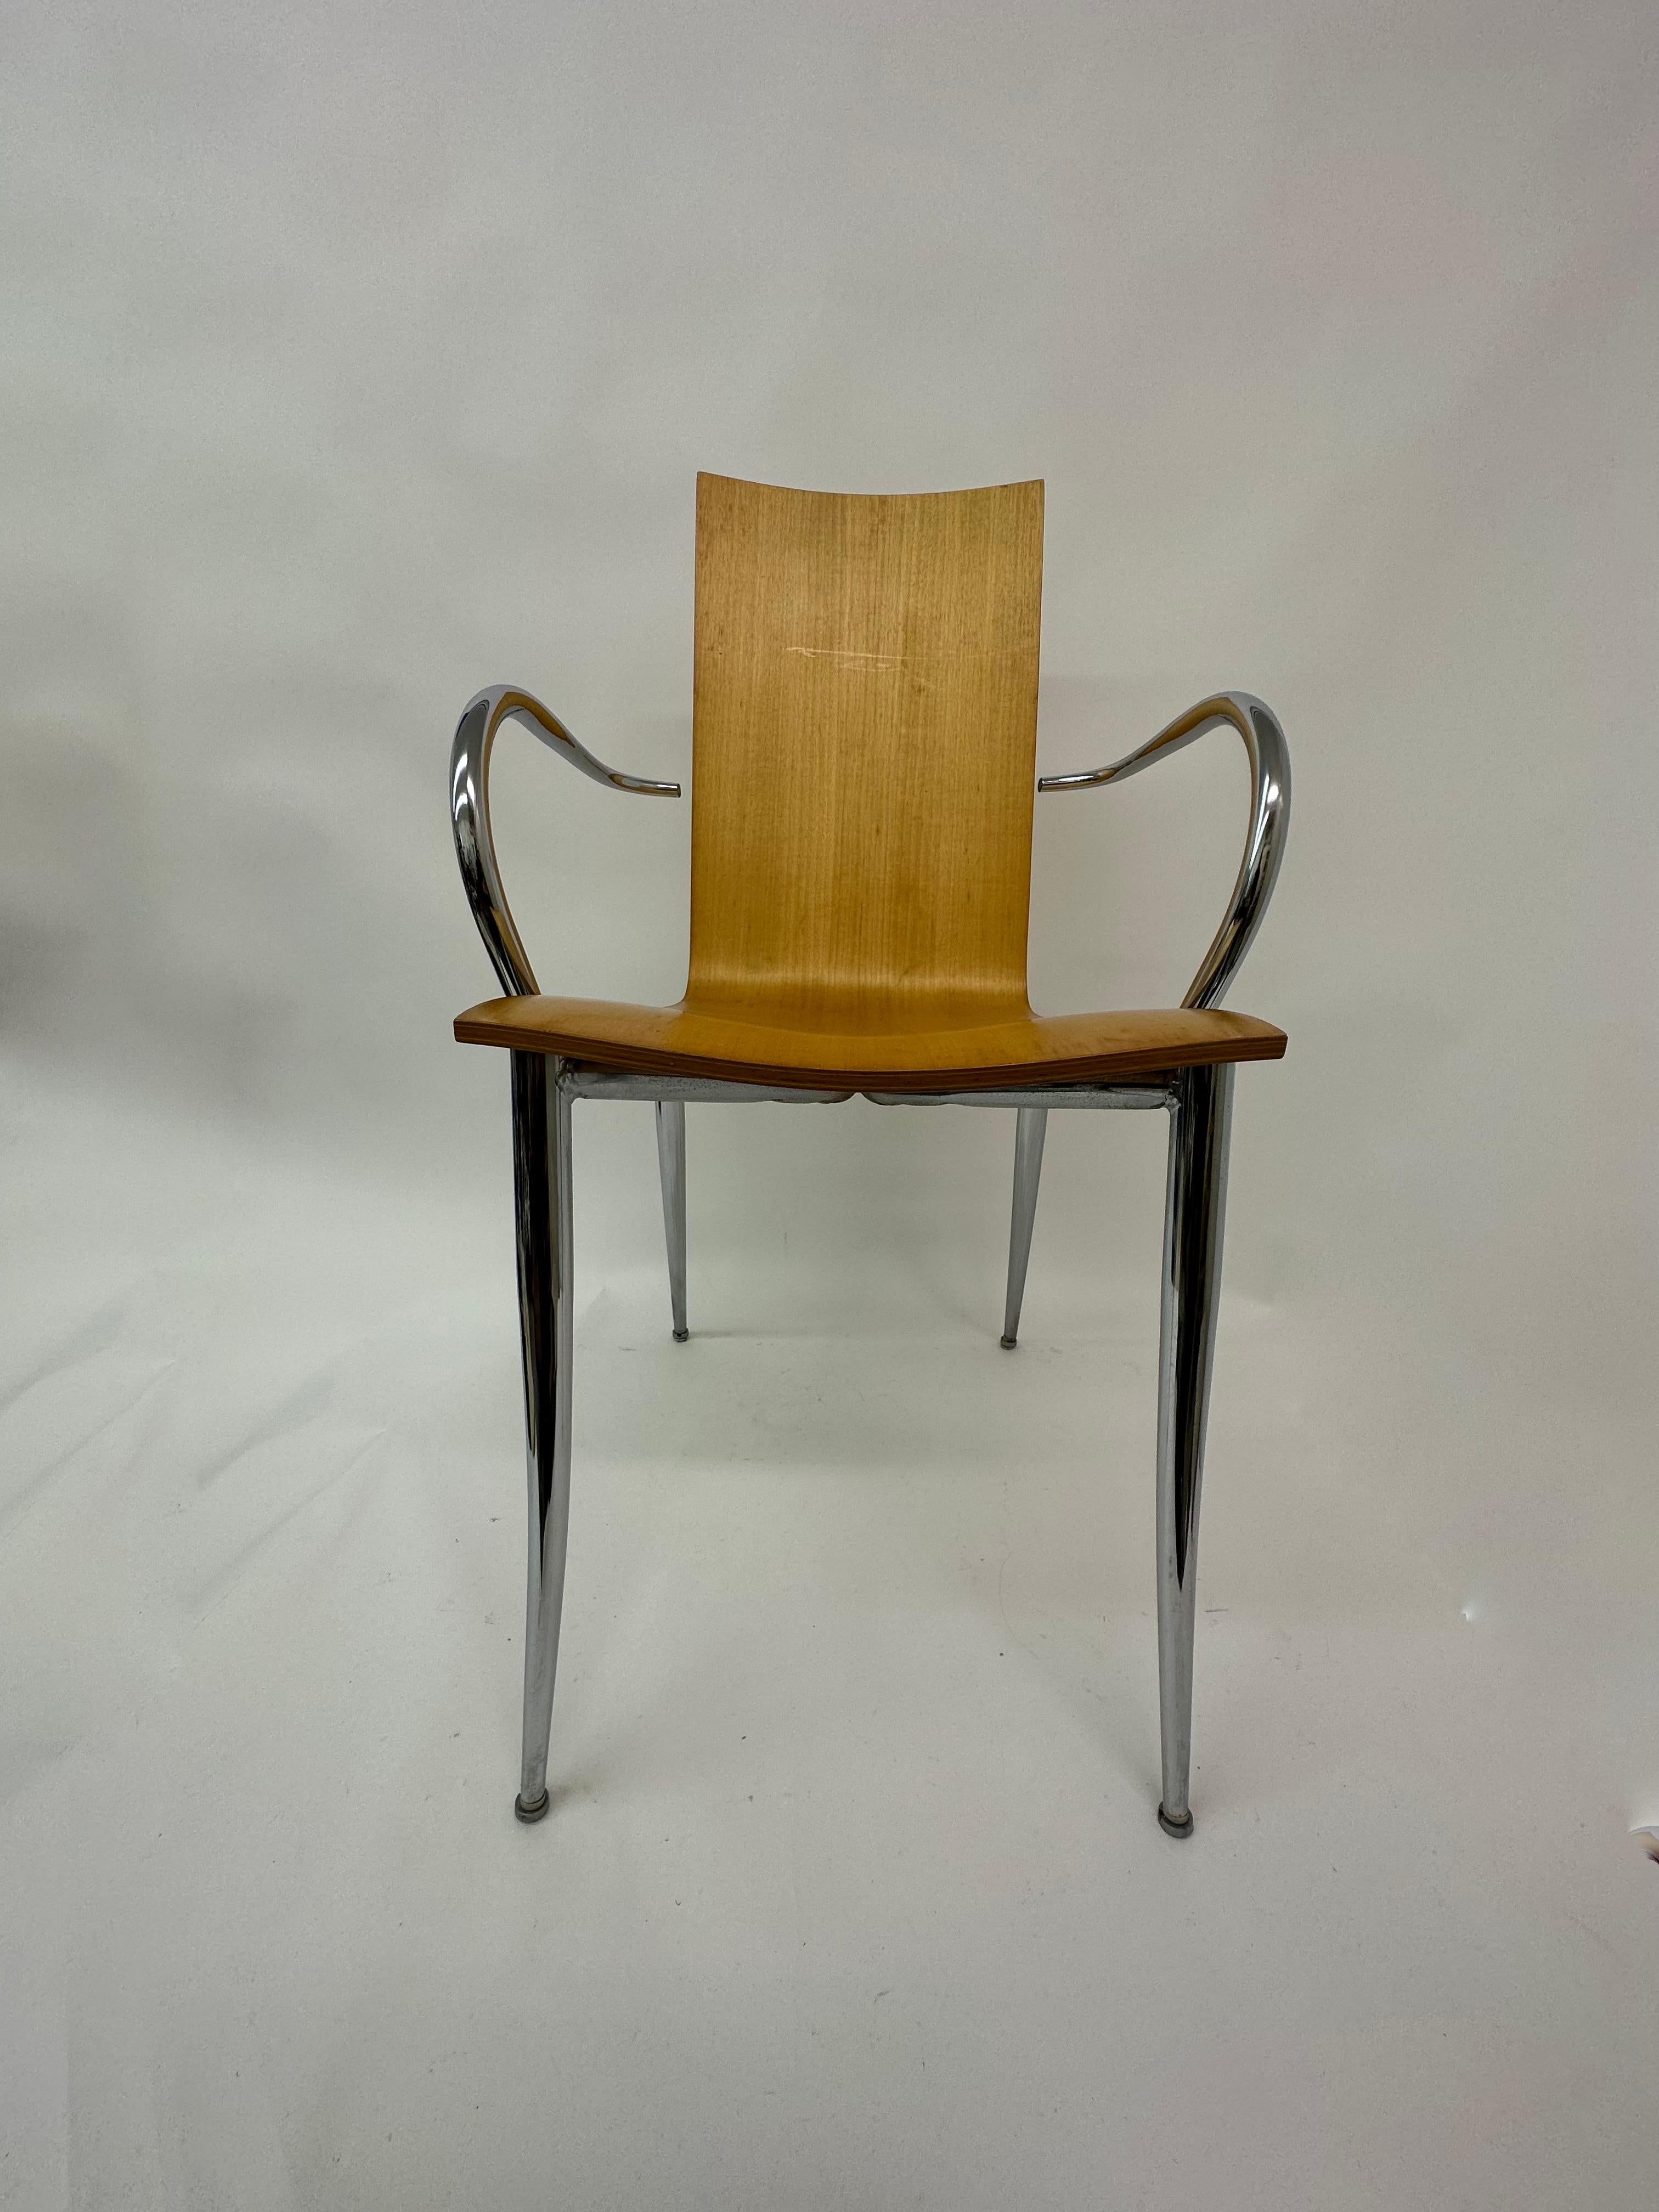 Dimensions: 52cm W, 47cm H seat, 67,5cm H arm rest, 91cm H total, 60cm D.
Period: 1990’s
Manufacturer: Driade
Model: Olly Tango
Designer: Philippe Starck